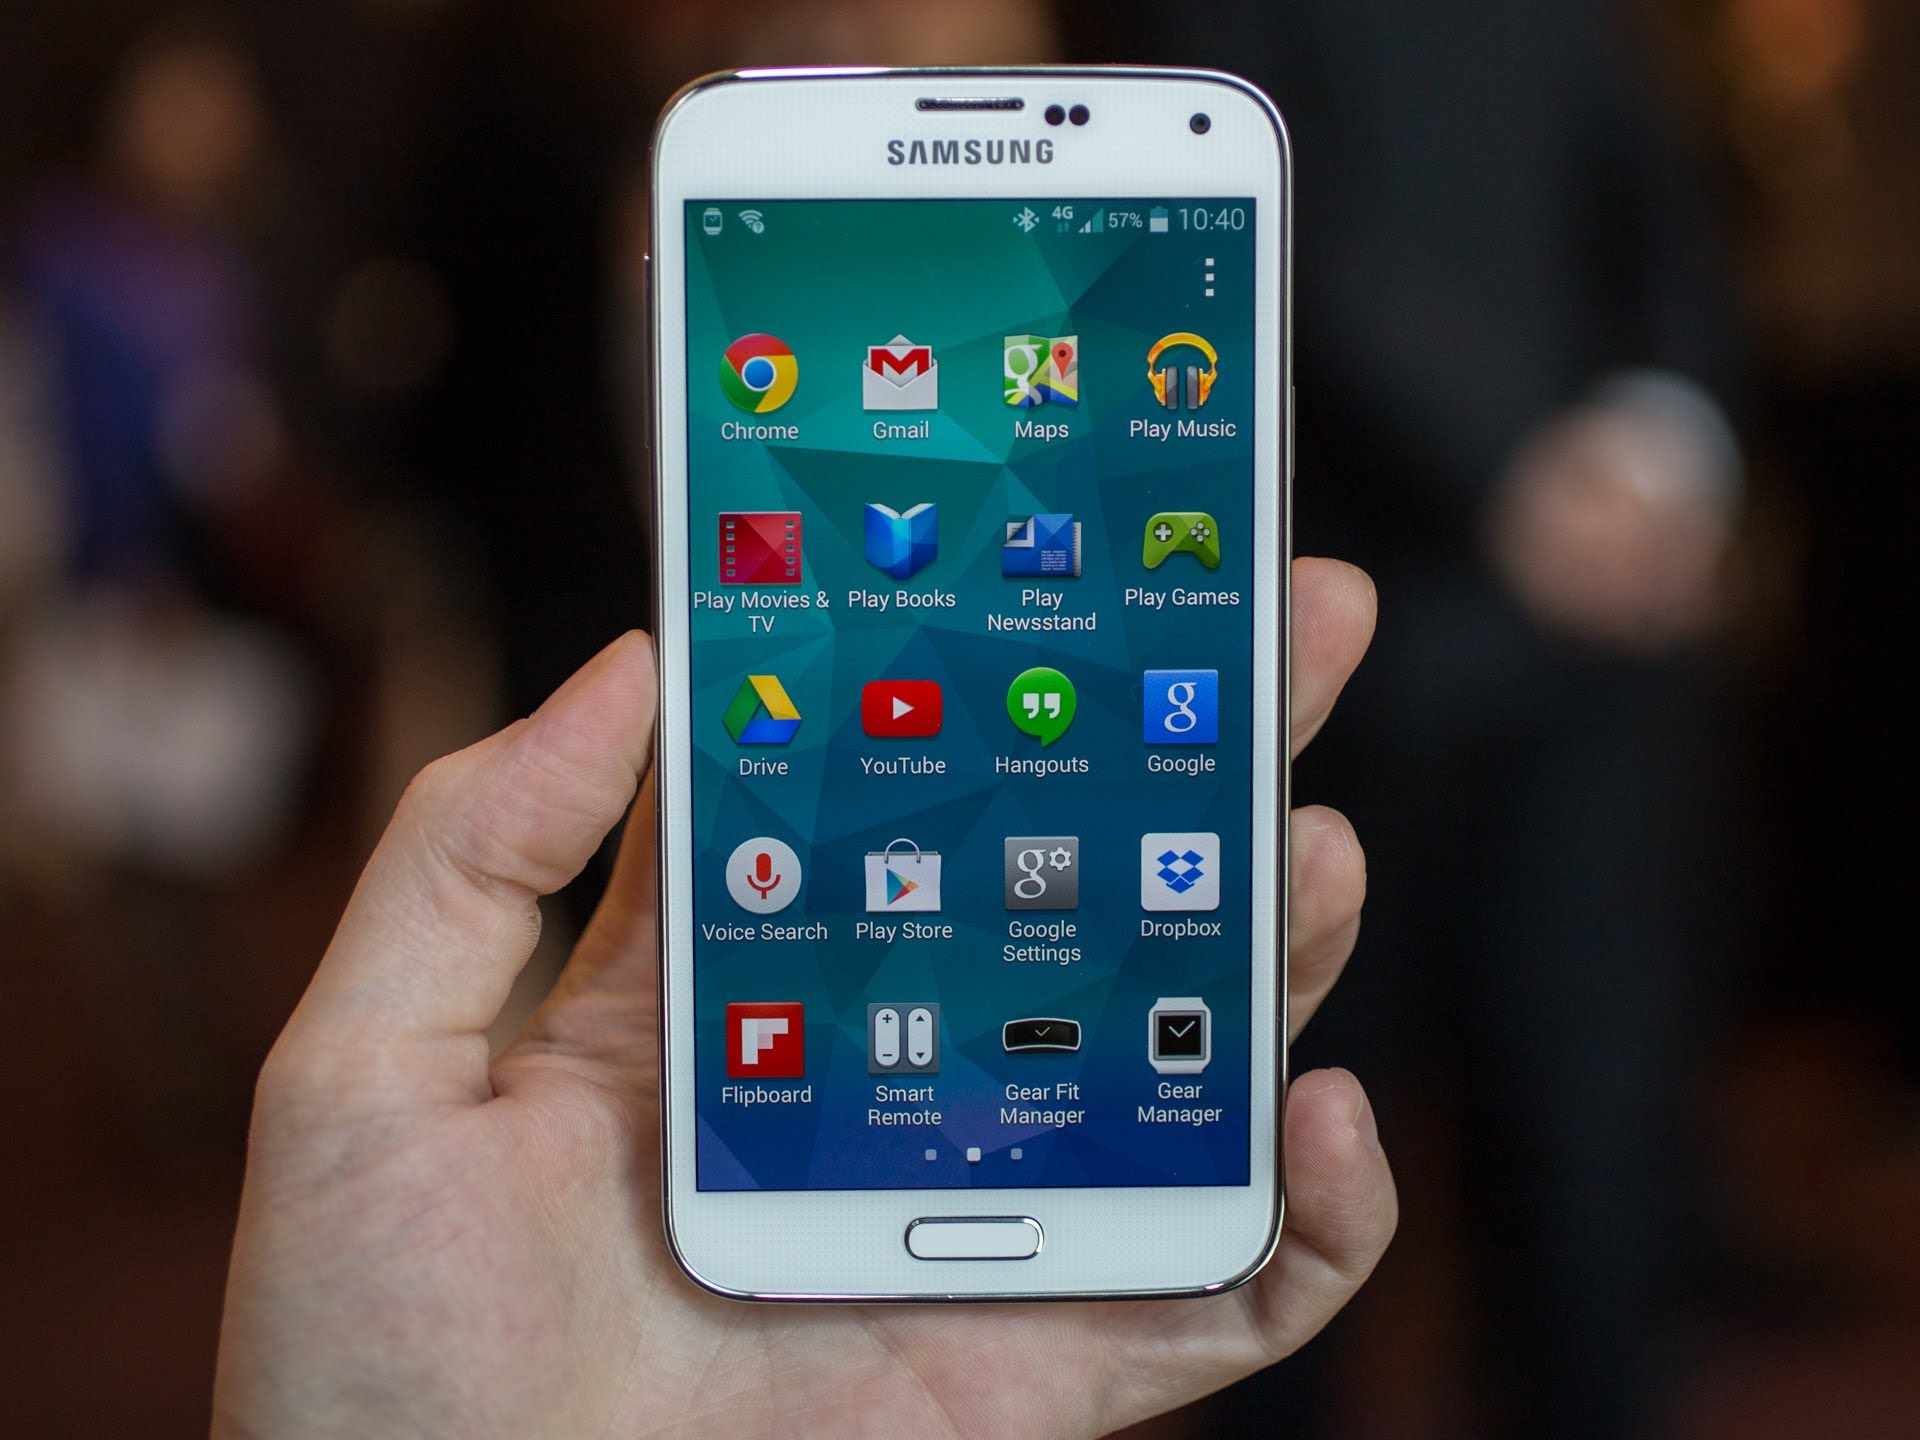 Ban Samsung Galaxy Alpha Gia Tot Tai TpHCM